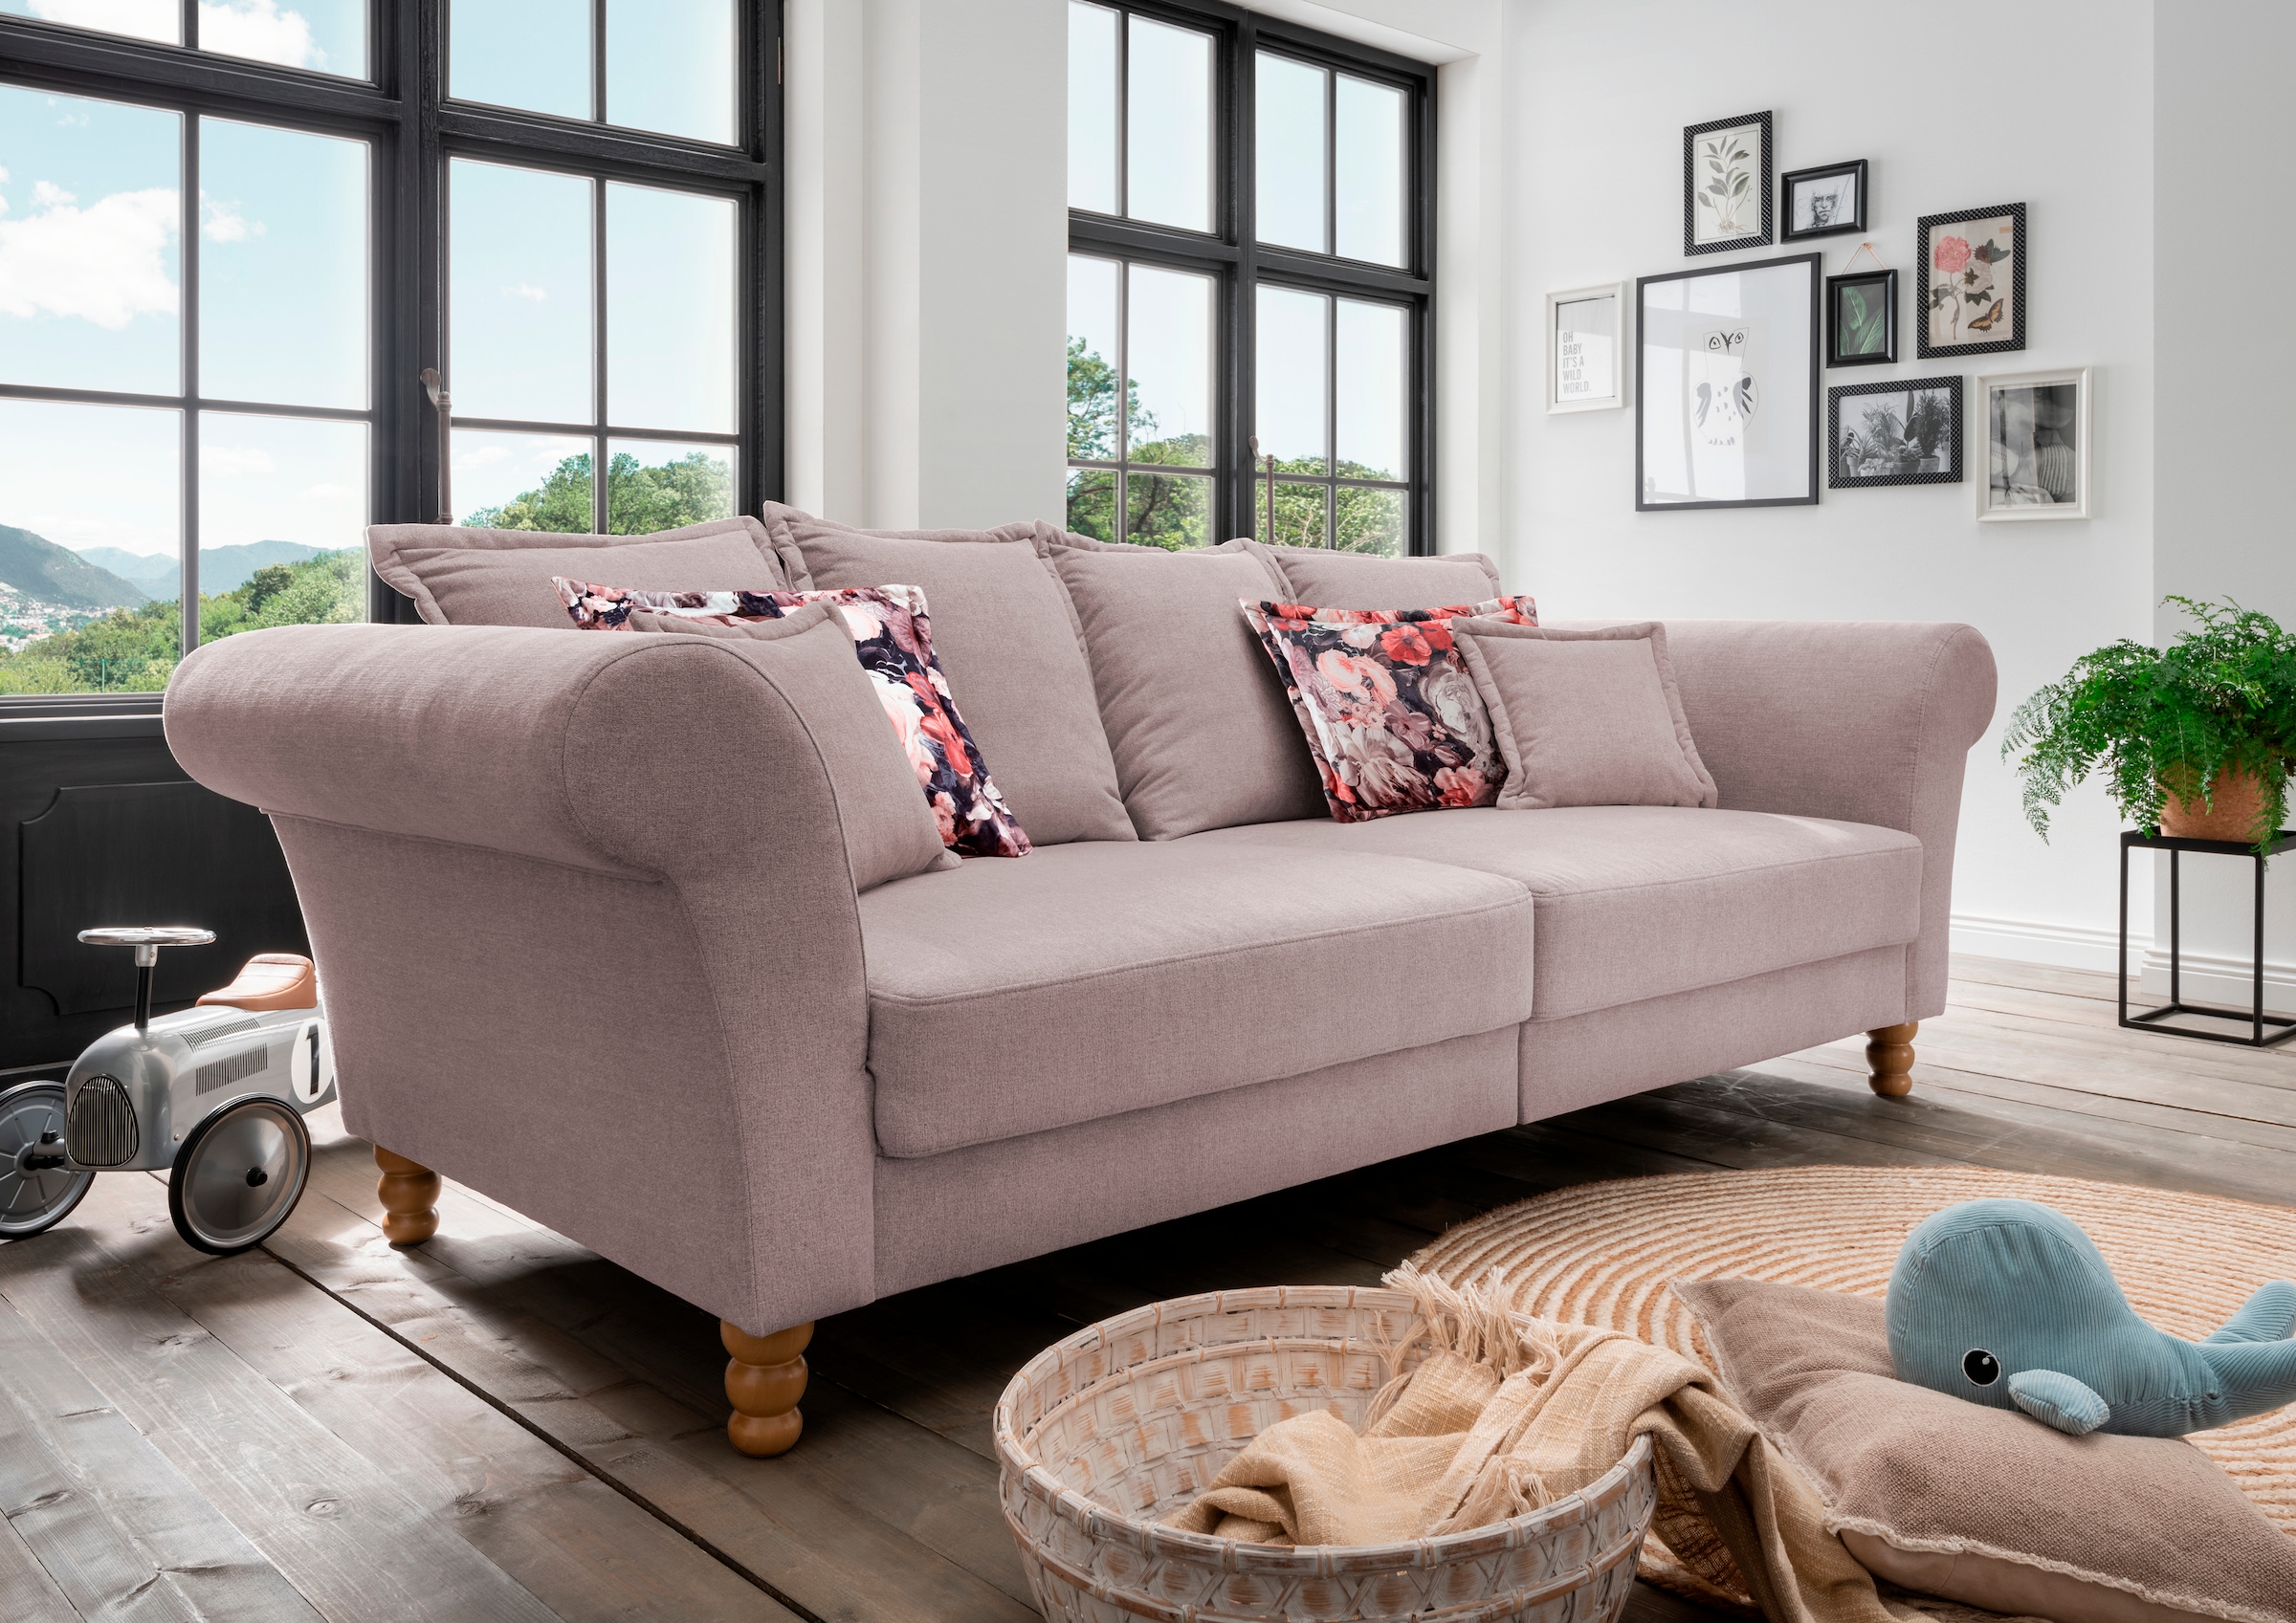 affaire bei Big-Sofa OTTO »Tassilo« Home kaufen